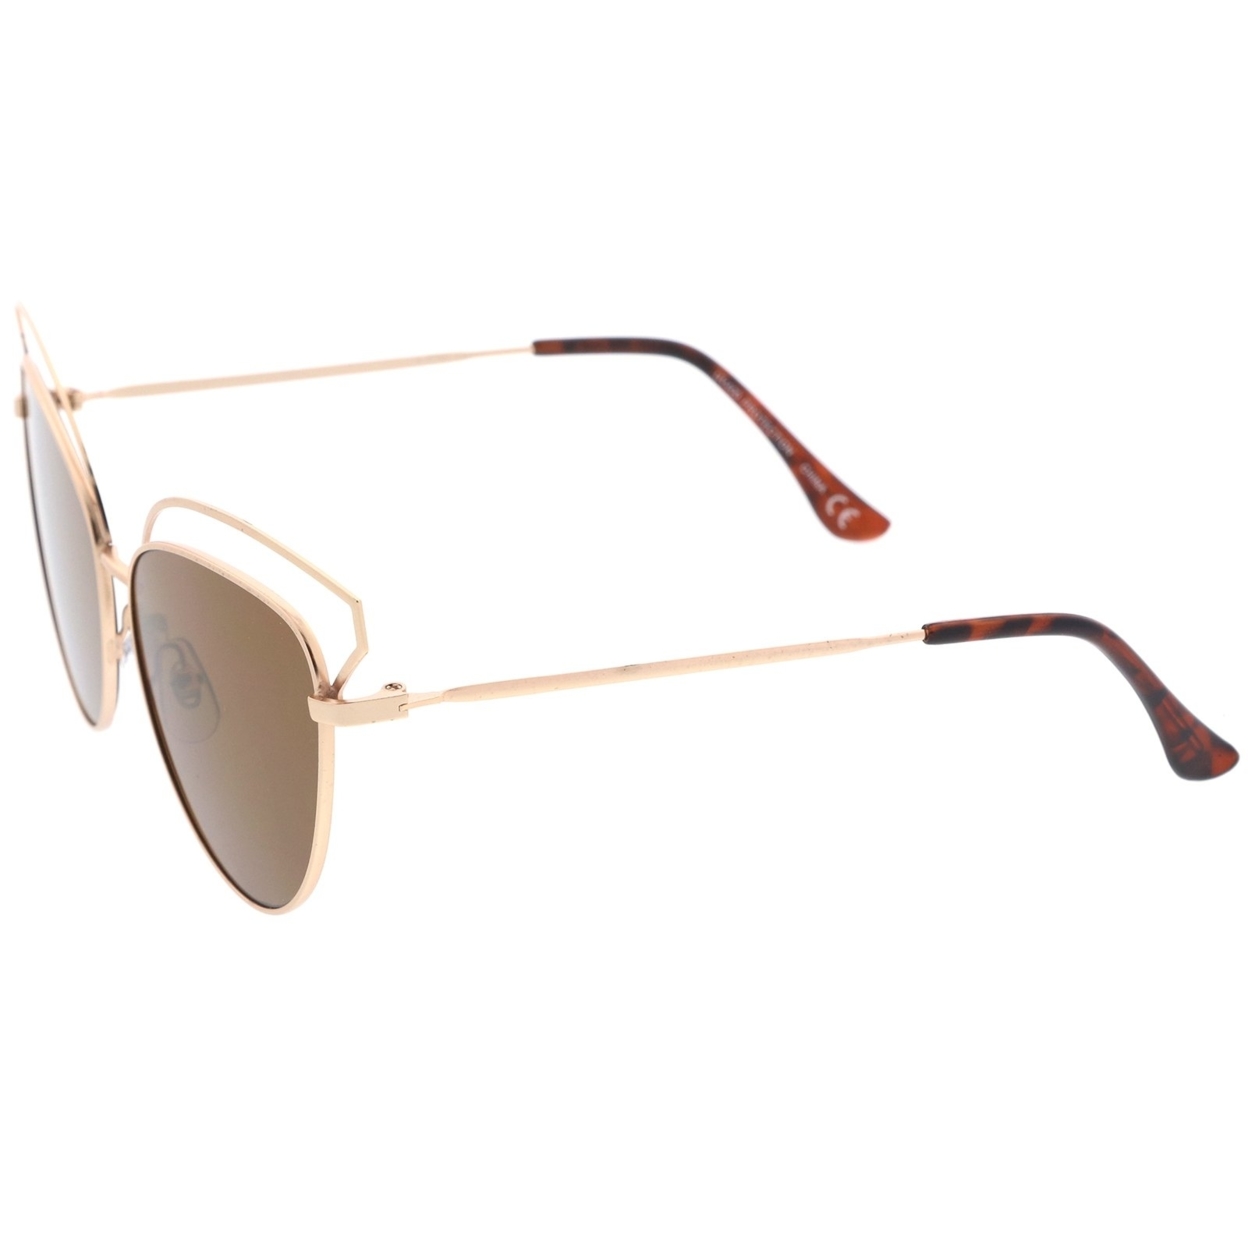 Women's Open Metal Frame Slim Temple Oversize Cat Eye Sunglasses 58mm - Gold / Brown